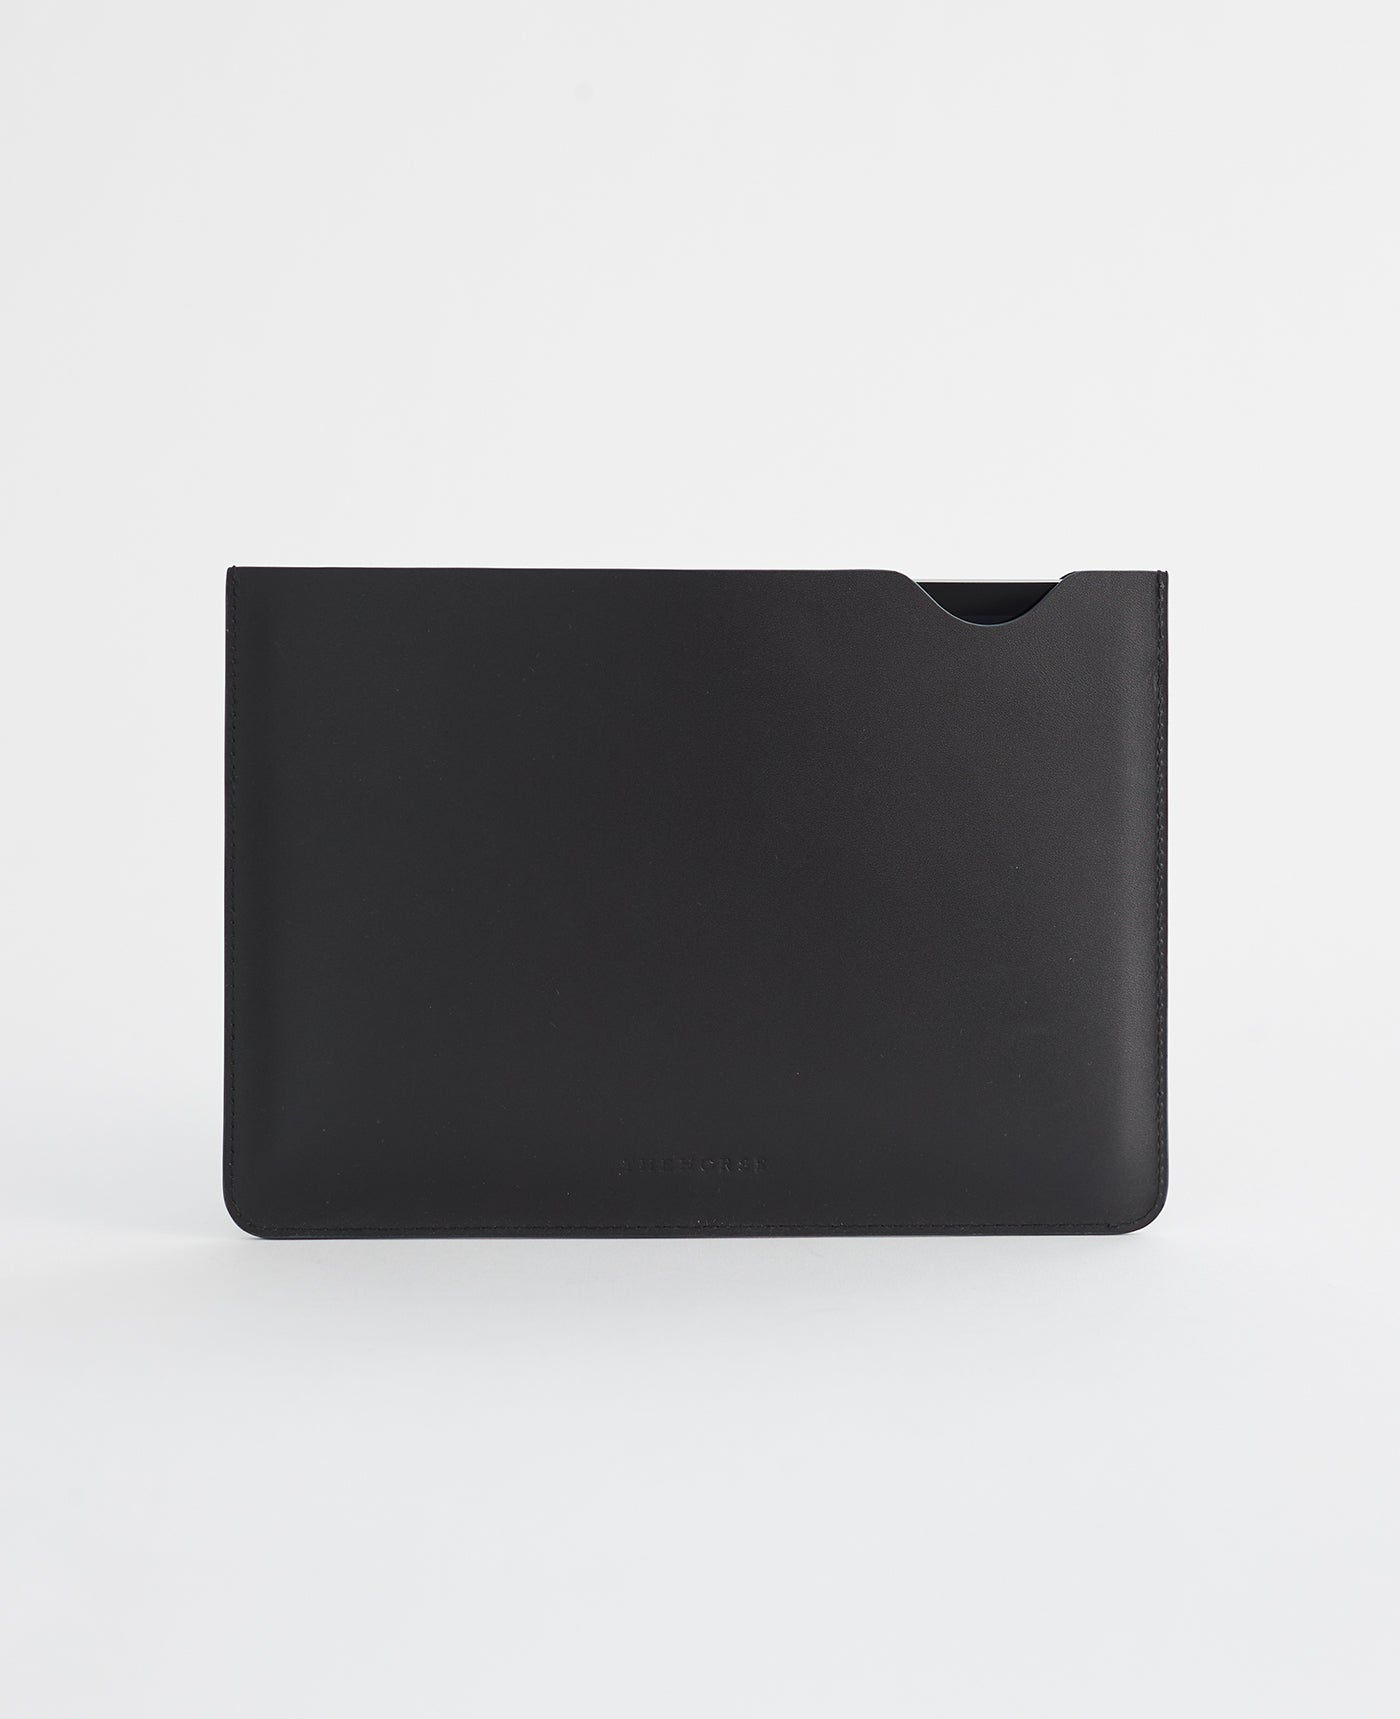 iPad Pro Leather Sleeve in Black